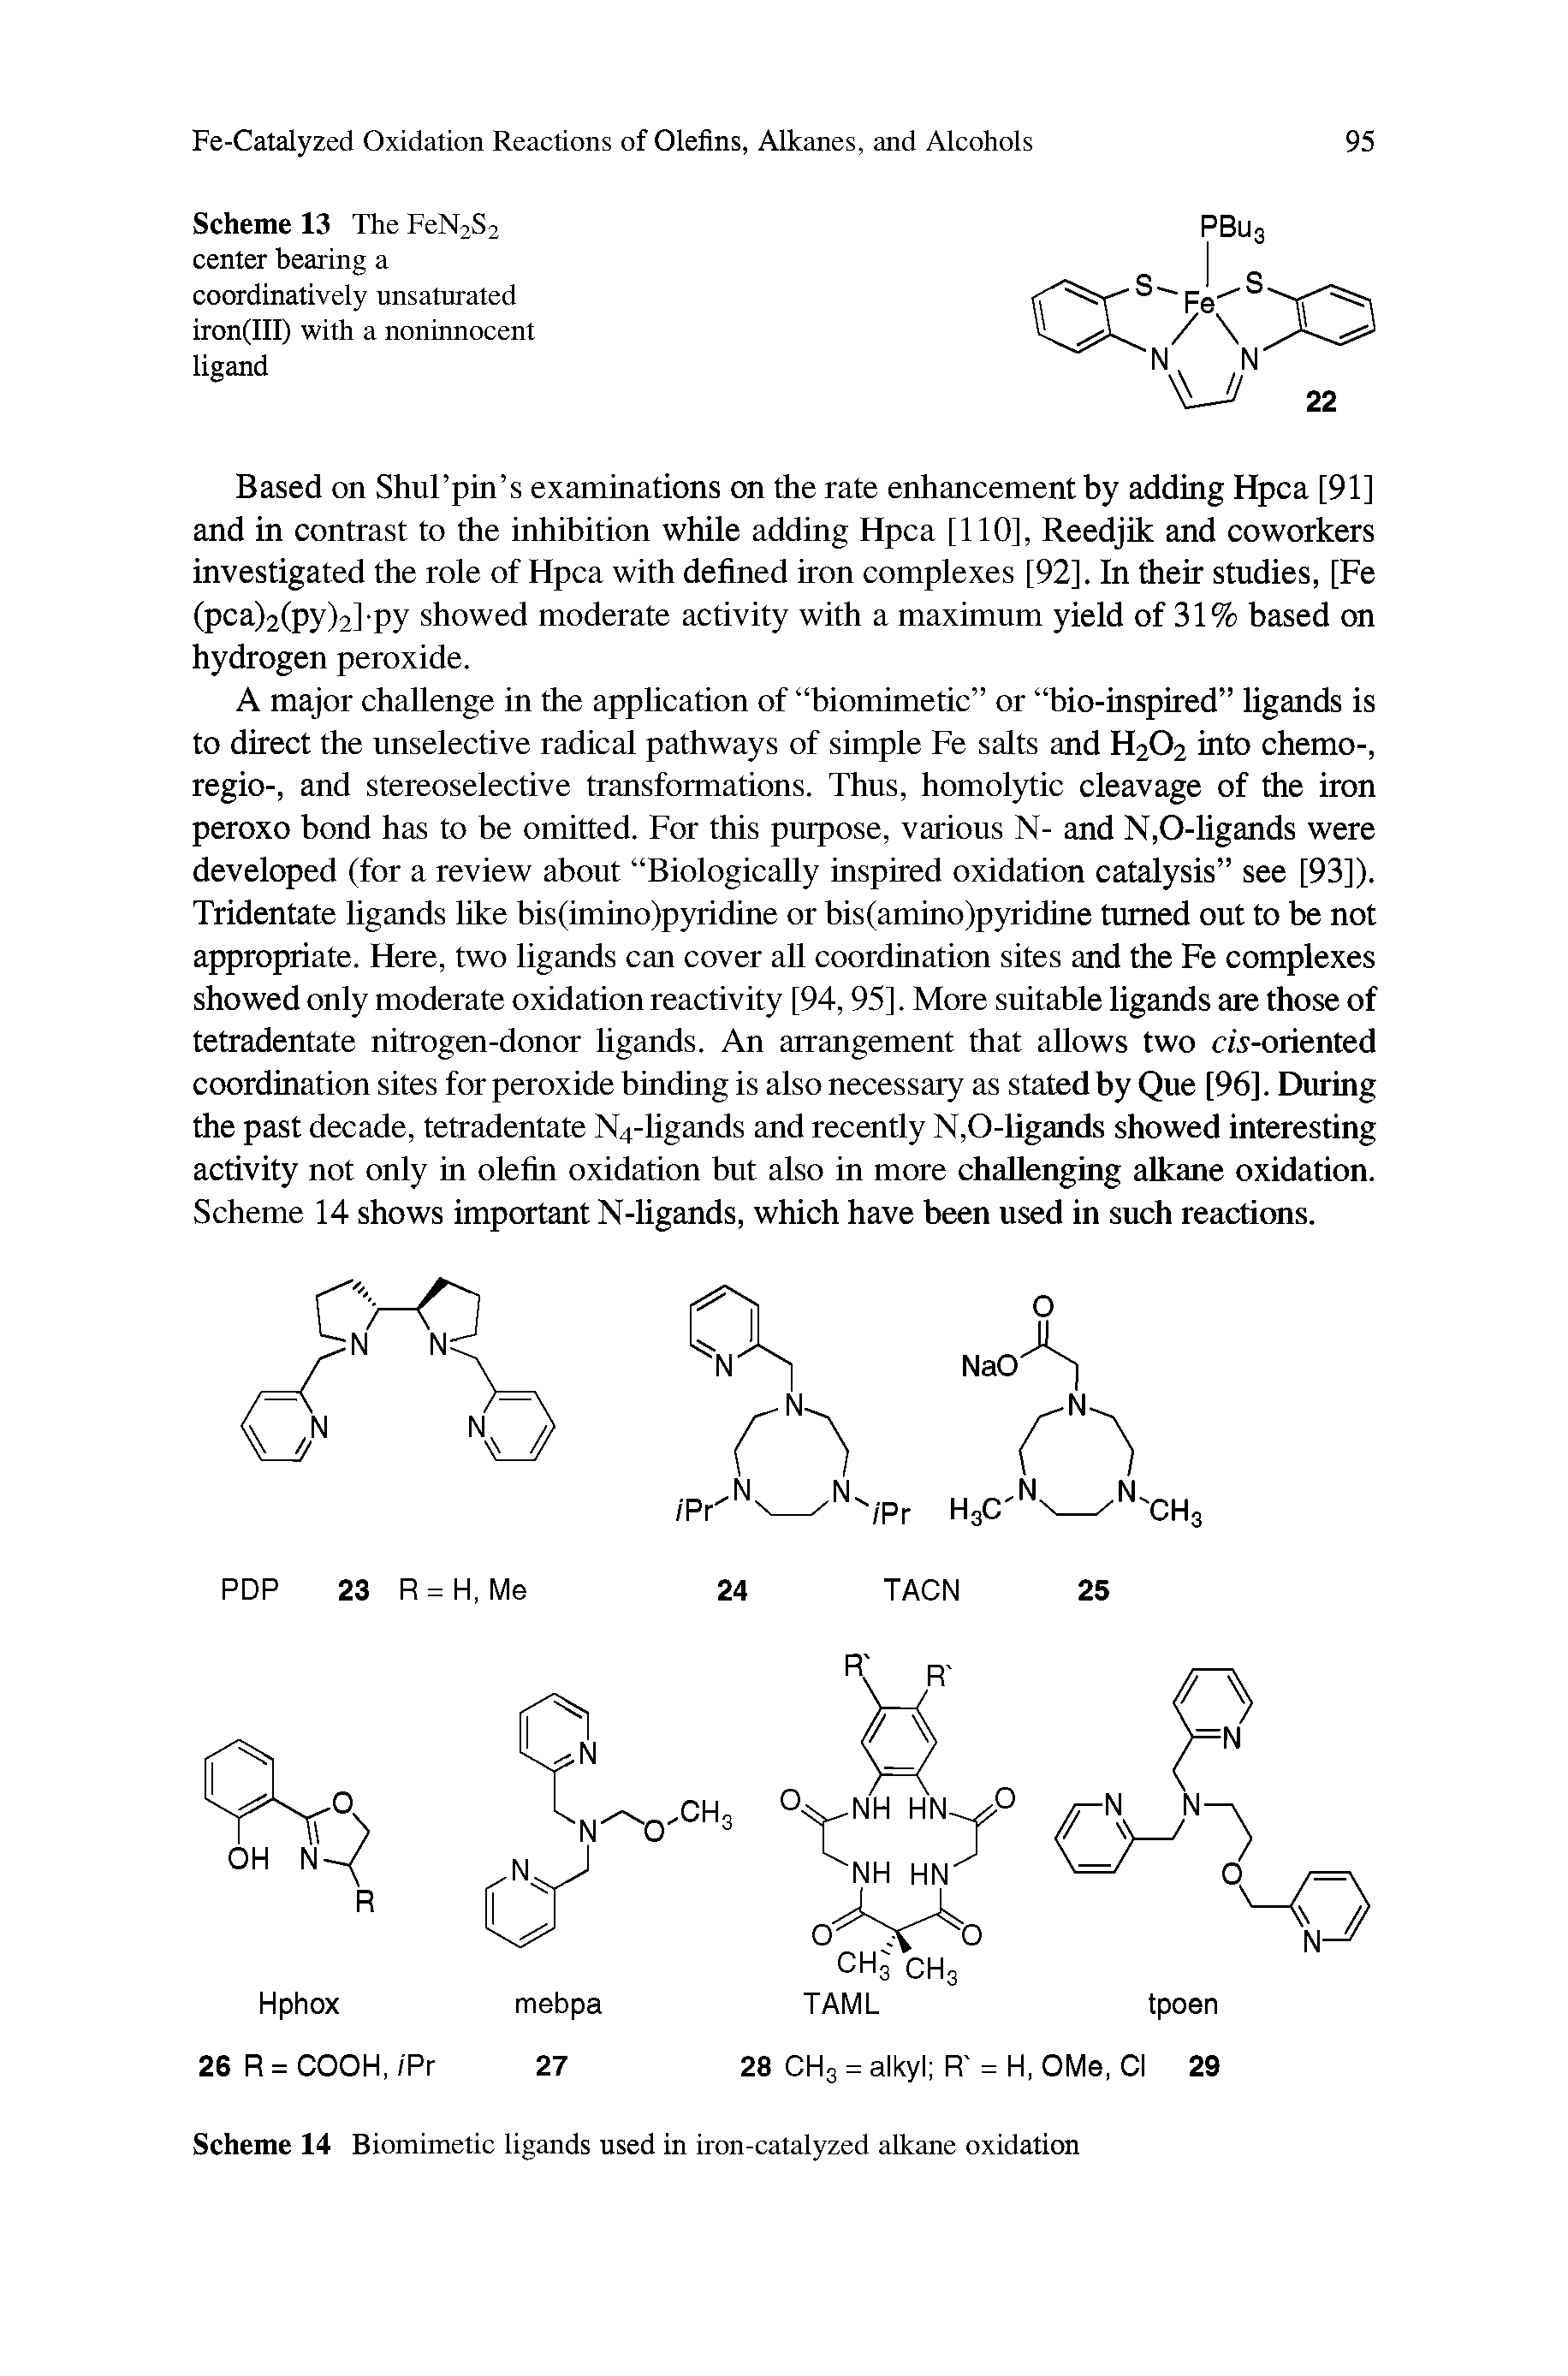 Scheme 14 Biomimetic ligands used in iron-catalyzed alkane oxidation...